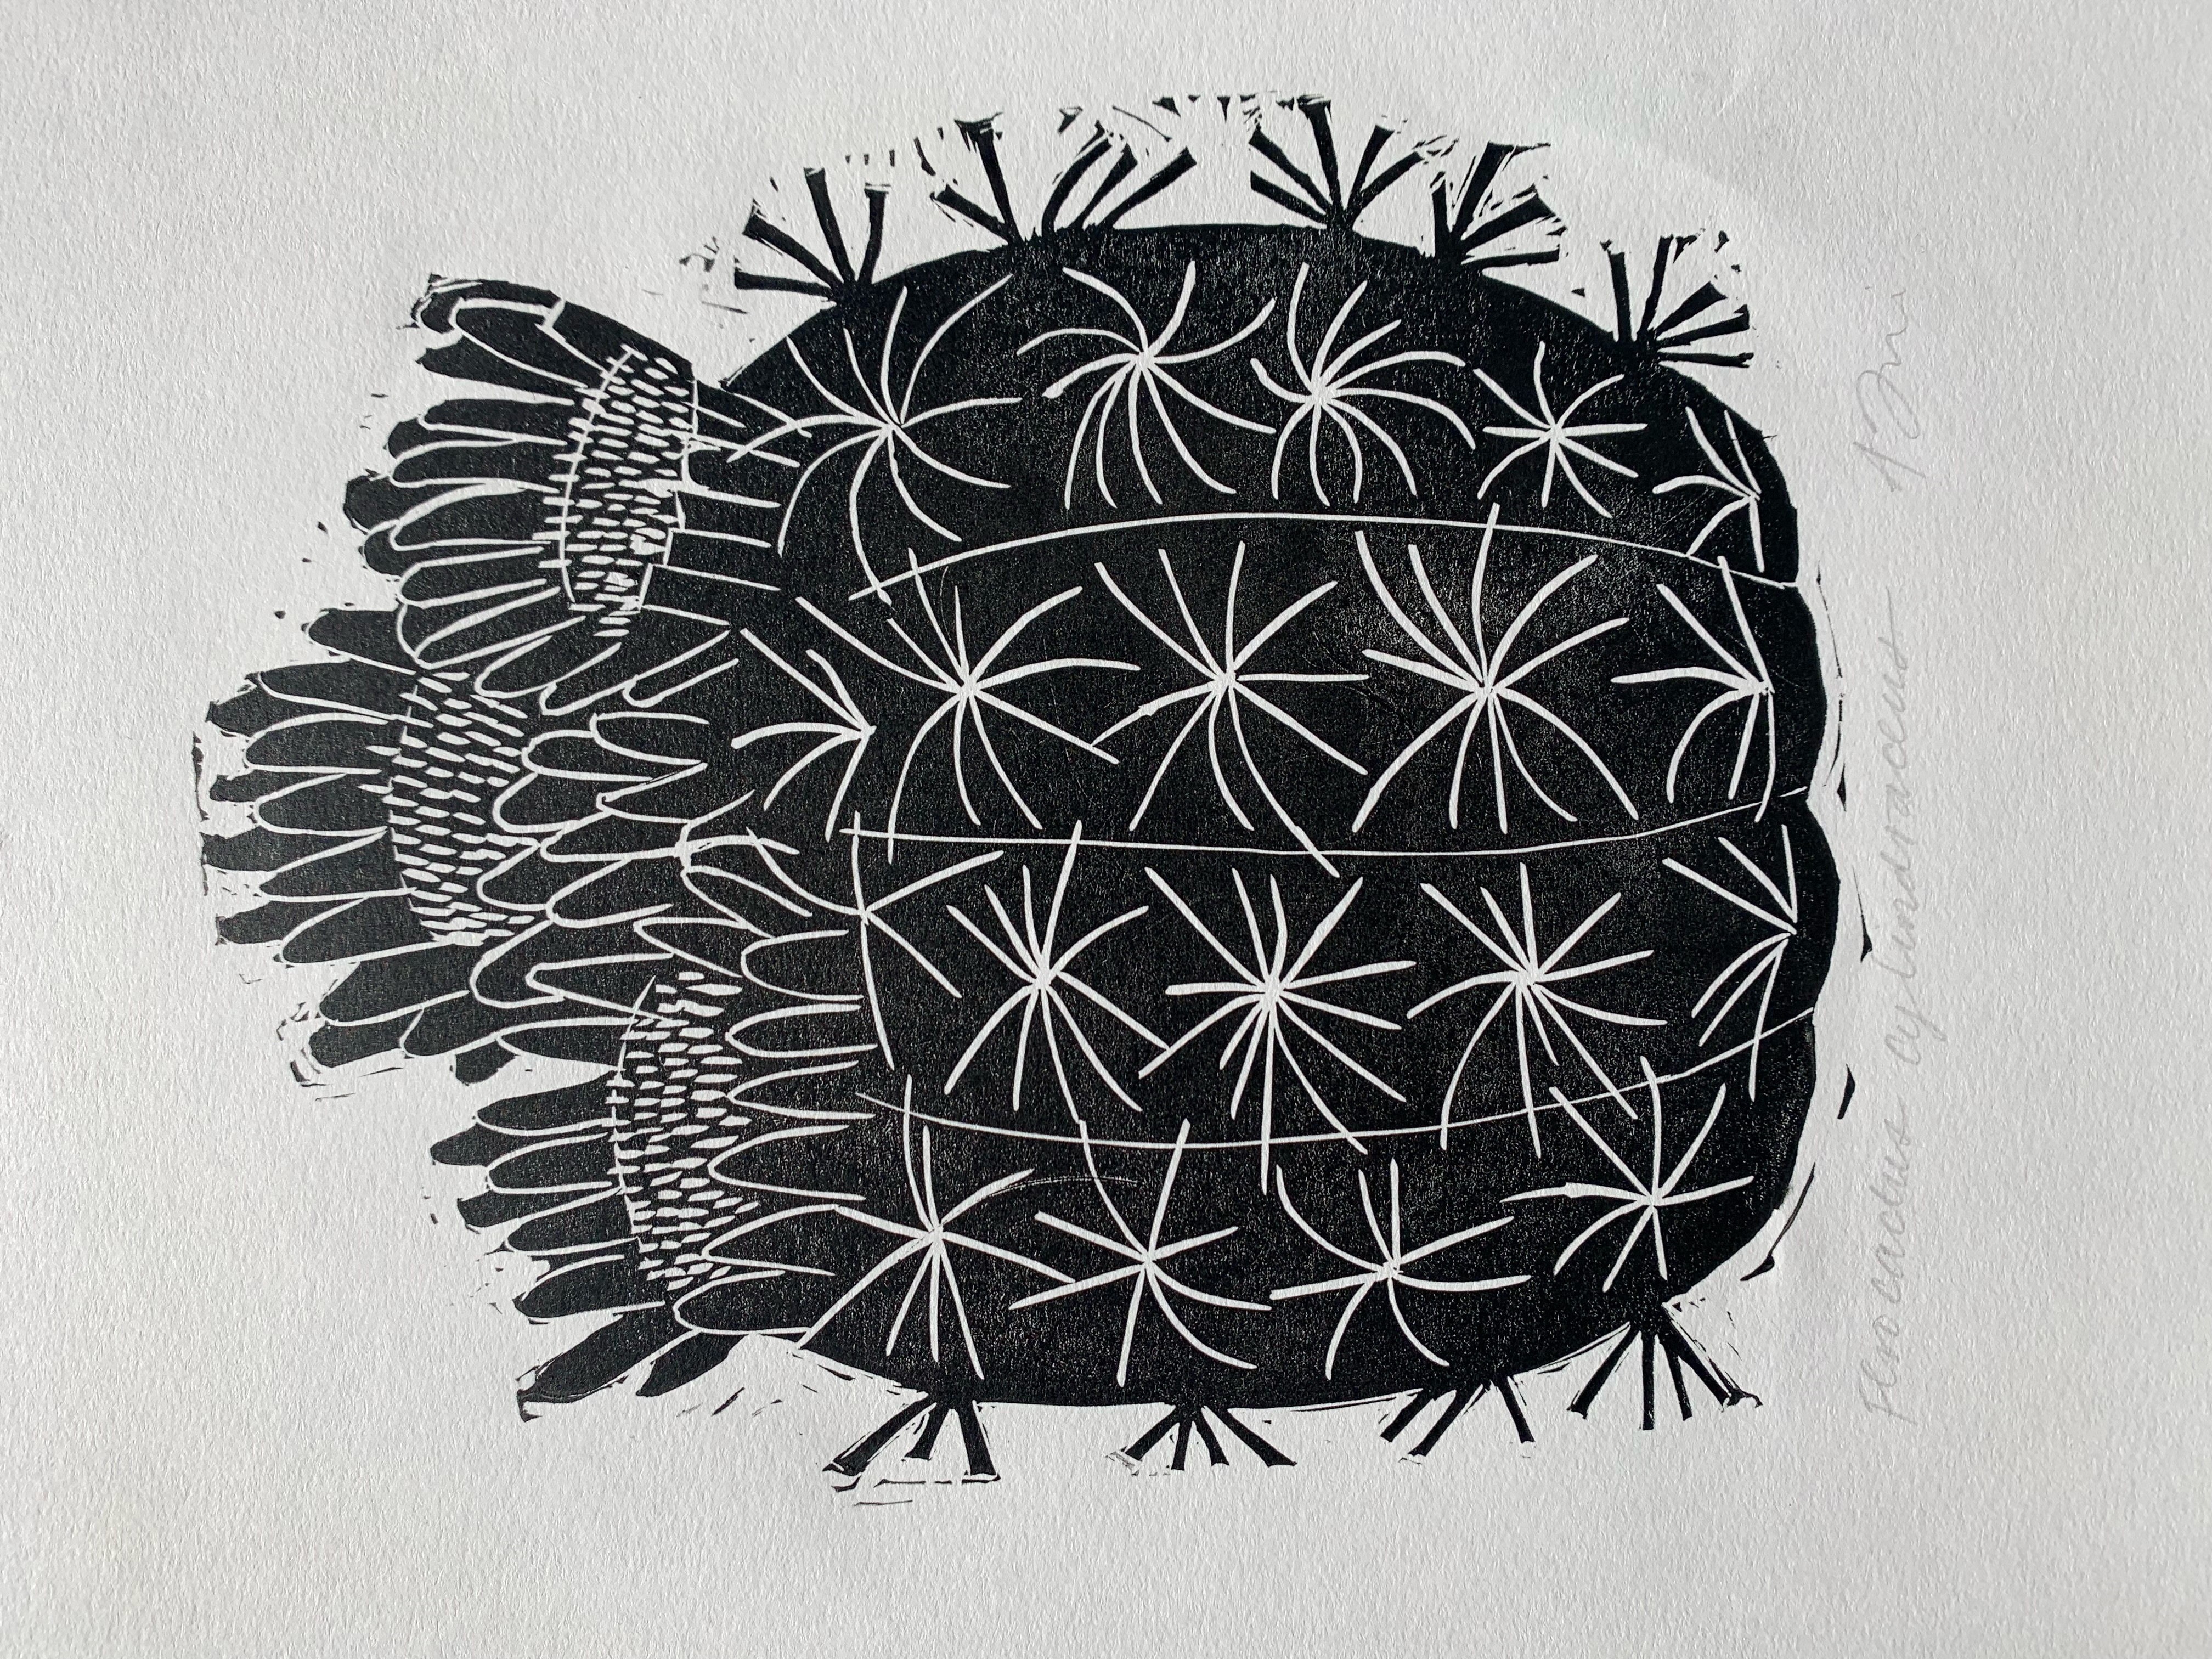 Block print of barrel cactus on white paper in black ink.